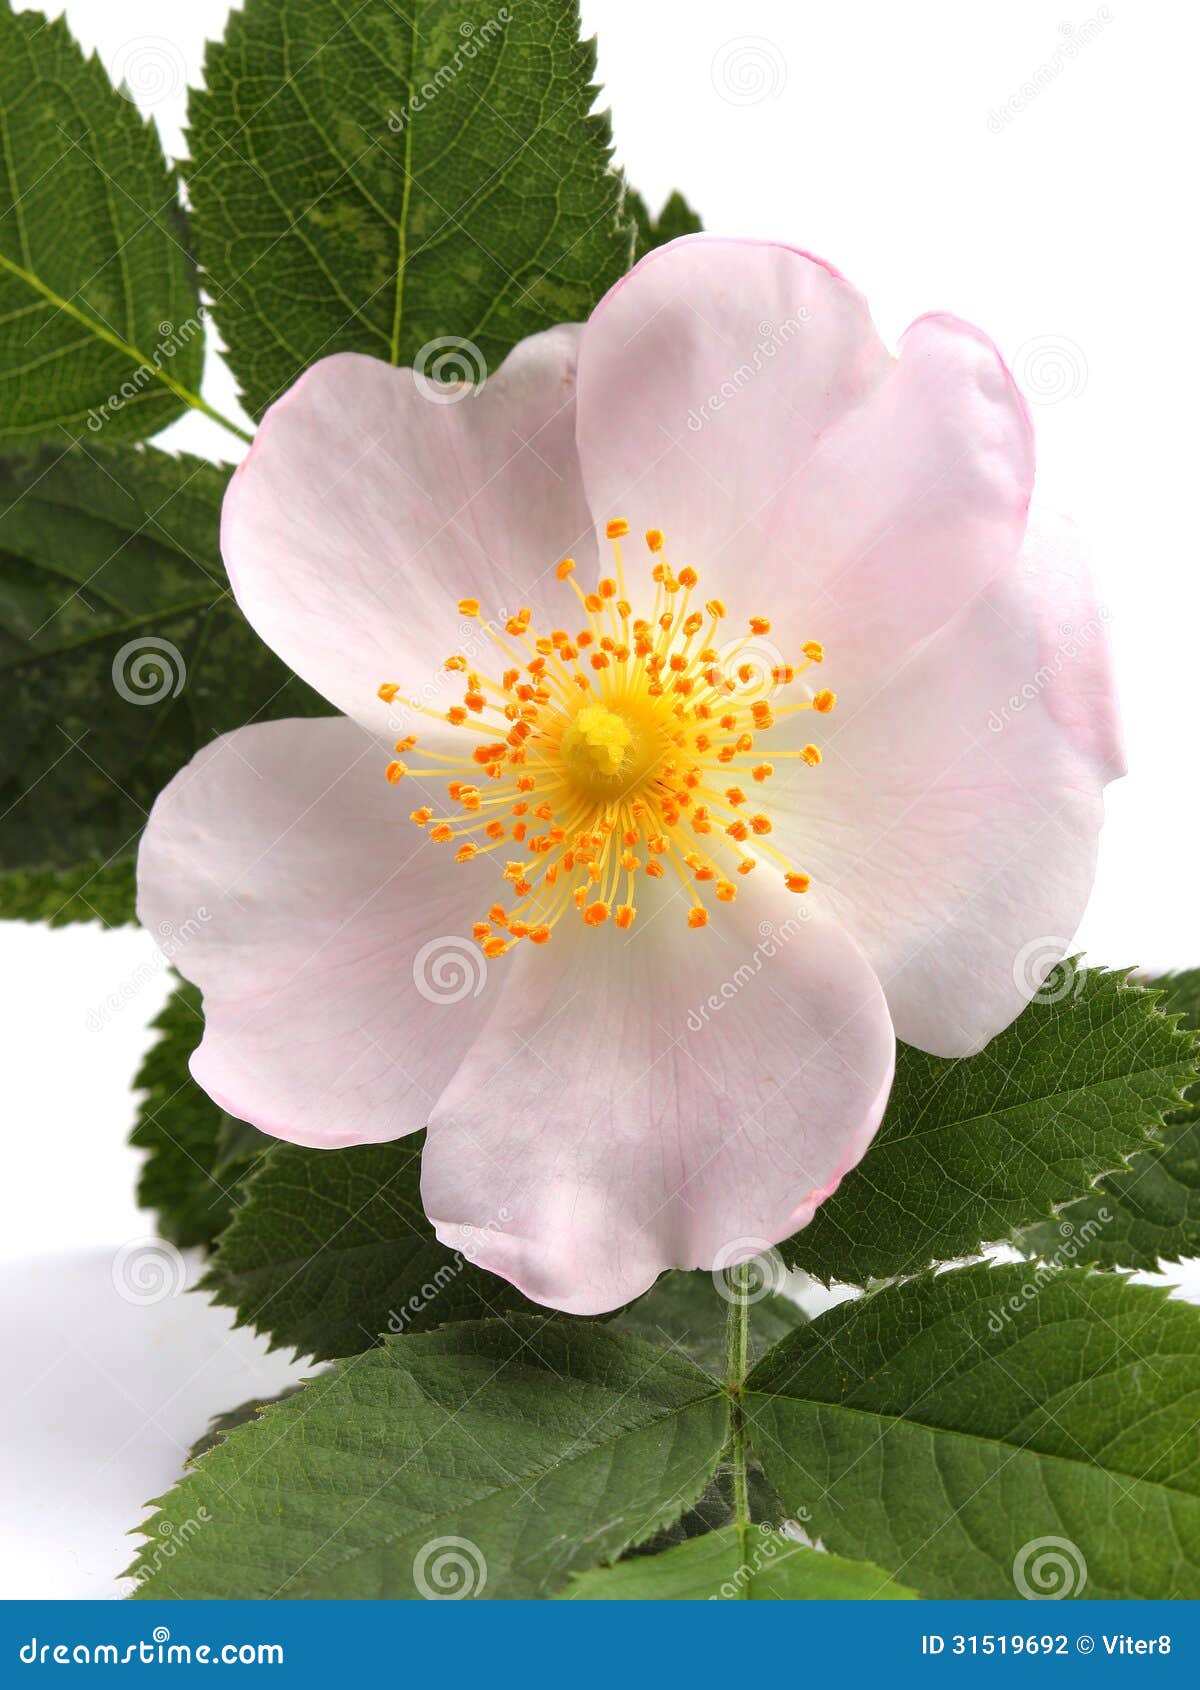 Flower of Dog Rose on White Stock Photo - Image of petals, rosebush ...